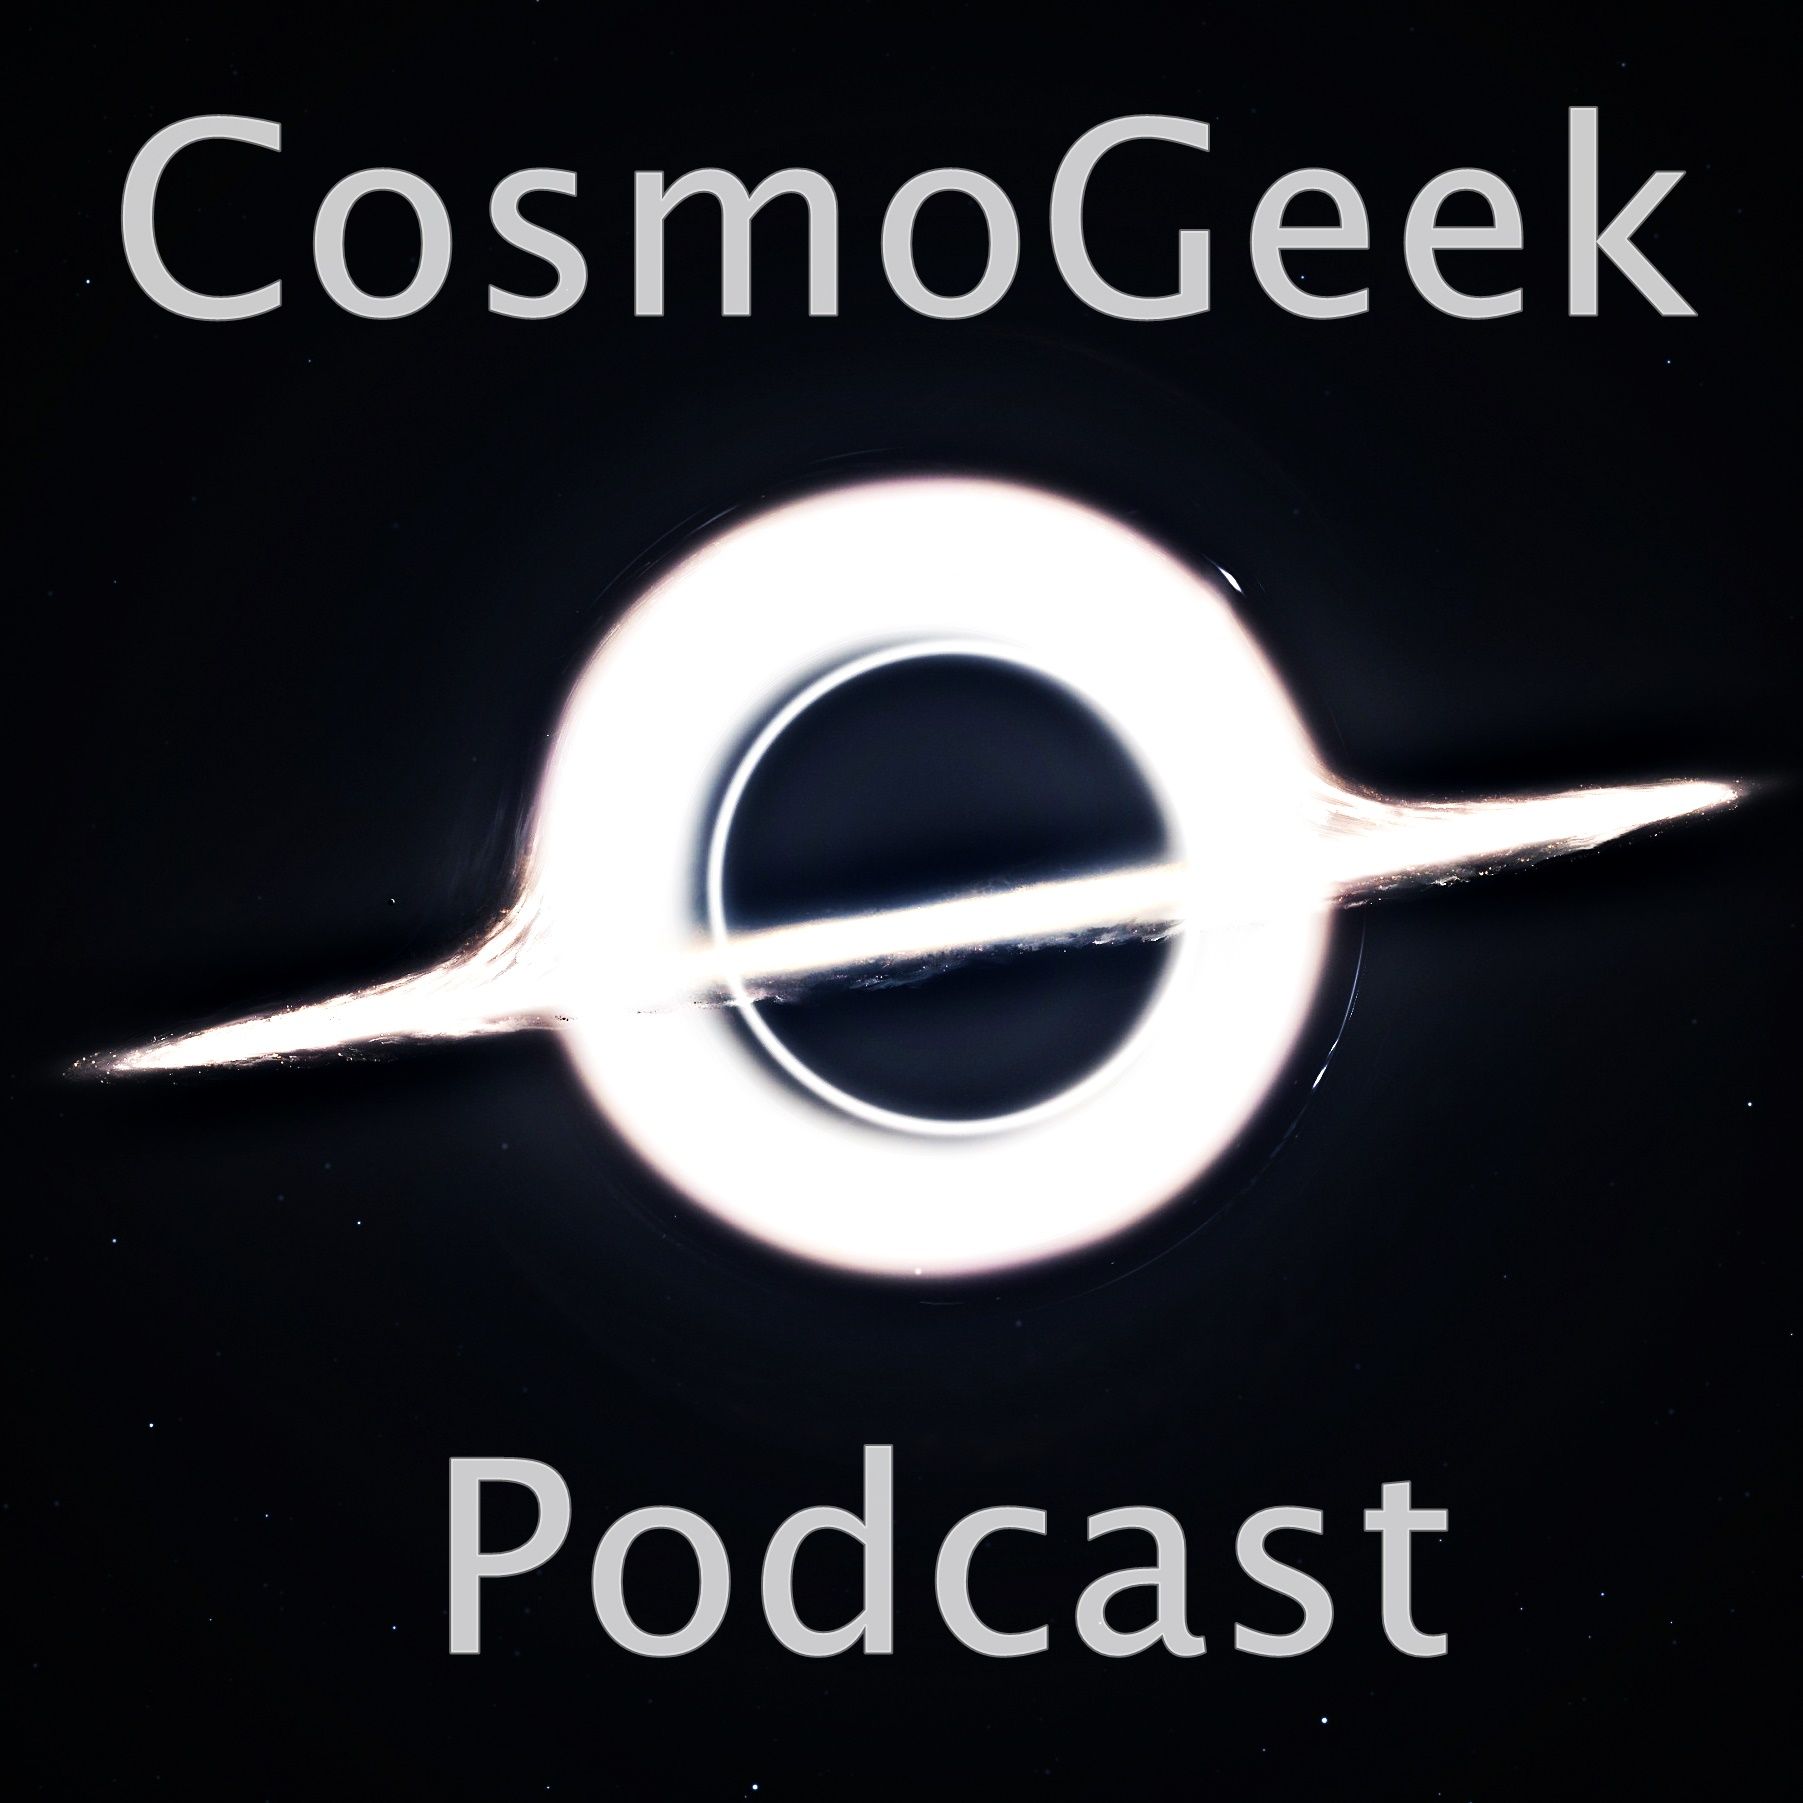 Cosmogeek Podcast